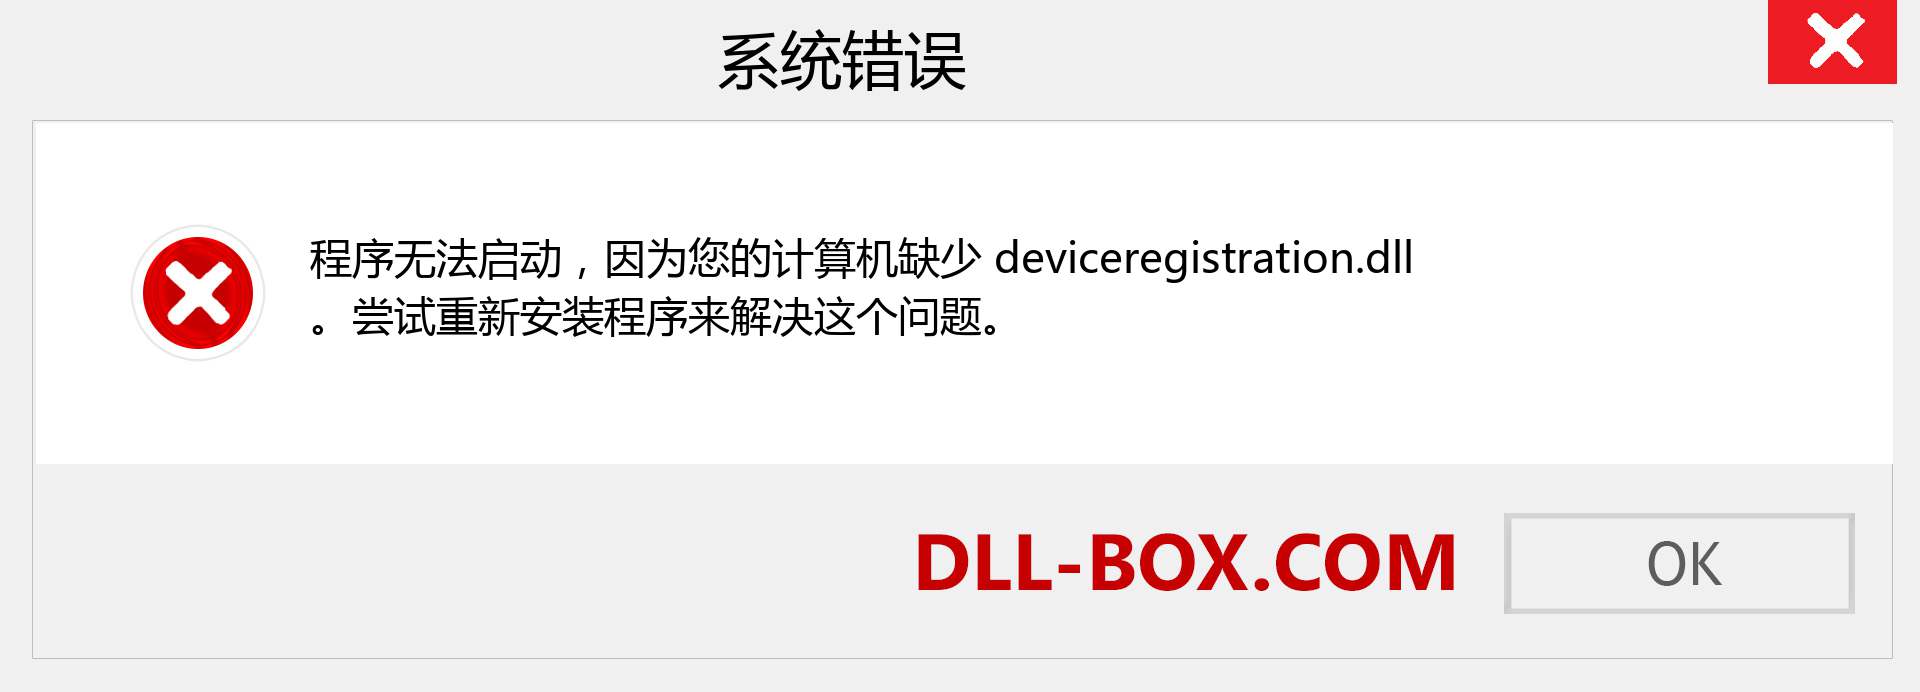 deviceregistration.dll 文件丢失？。 适用于 Windows 7、8、10 的下载 - 修复 Windows、照片、图像上的 deviceregistration dll 丢失错误